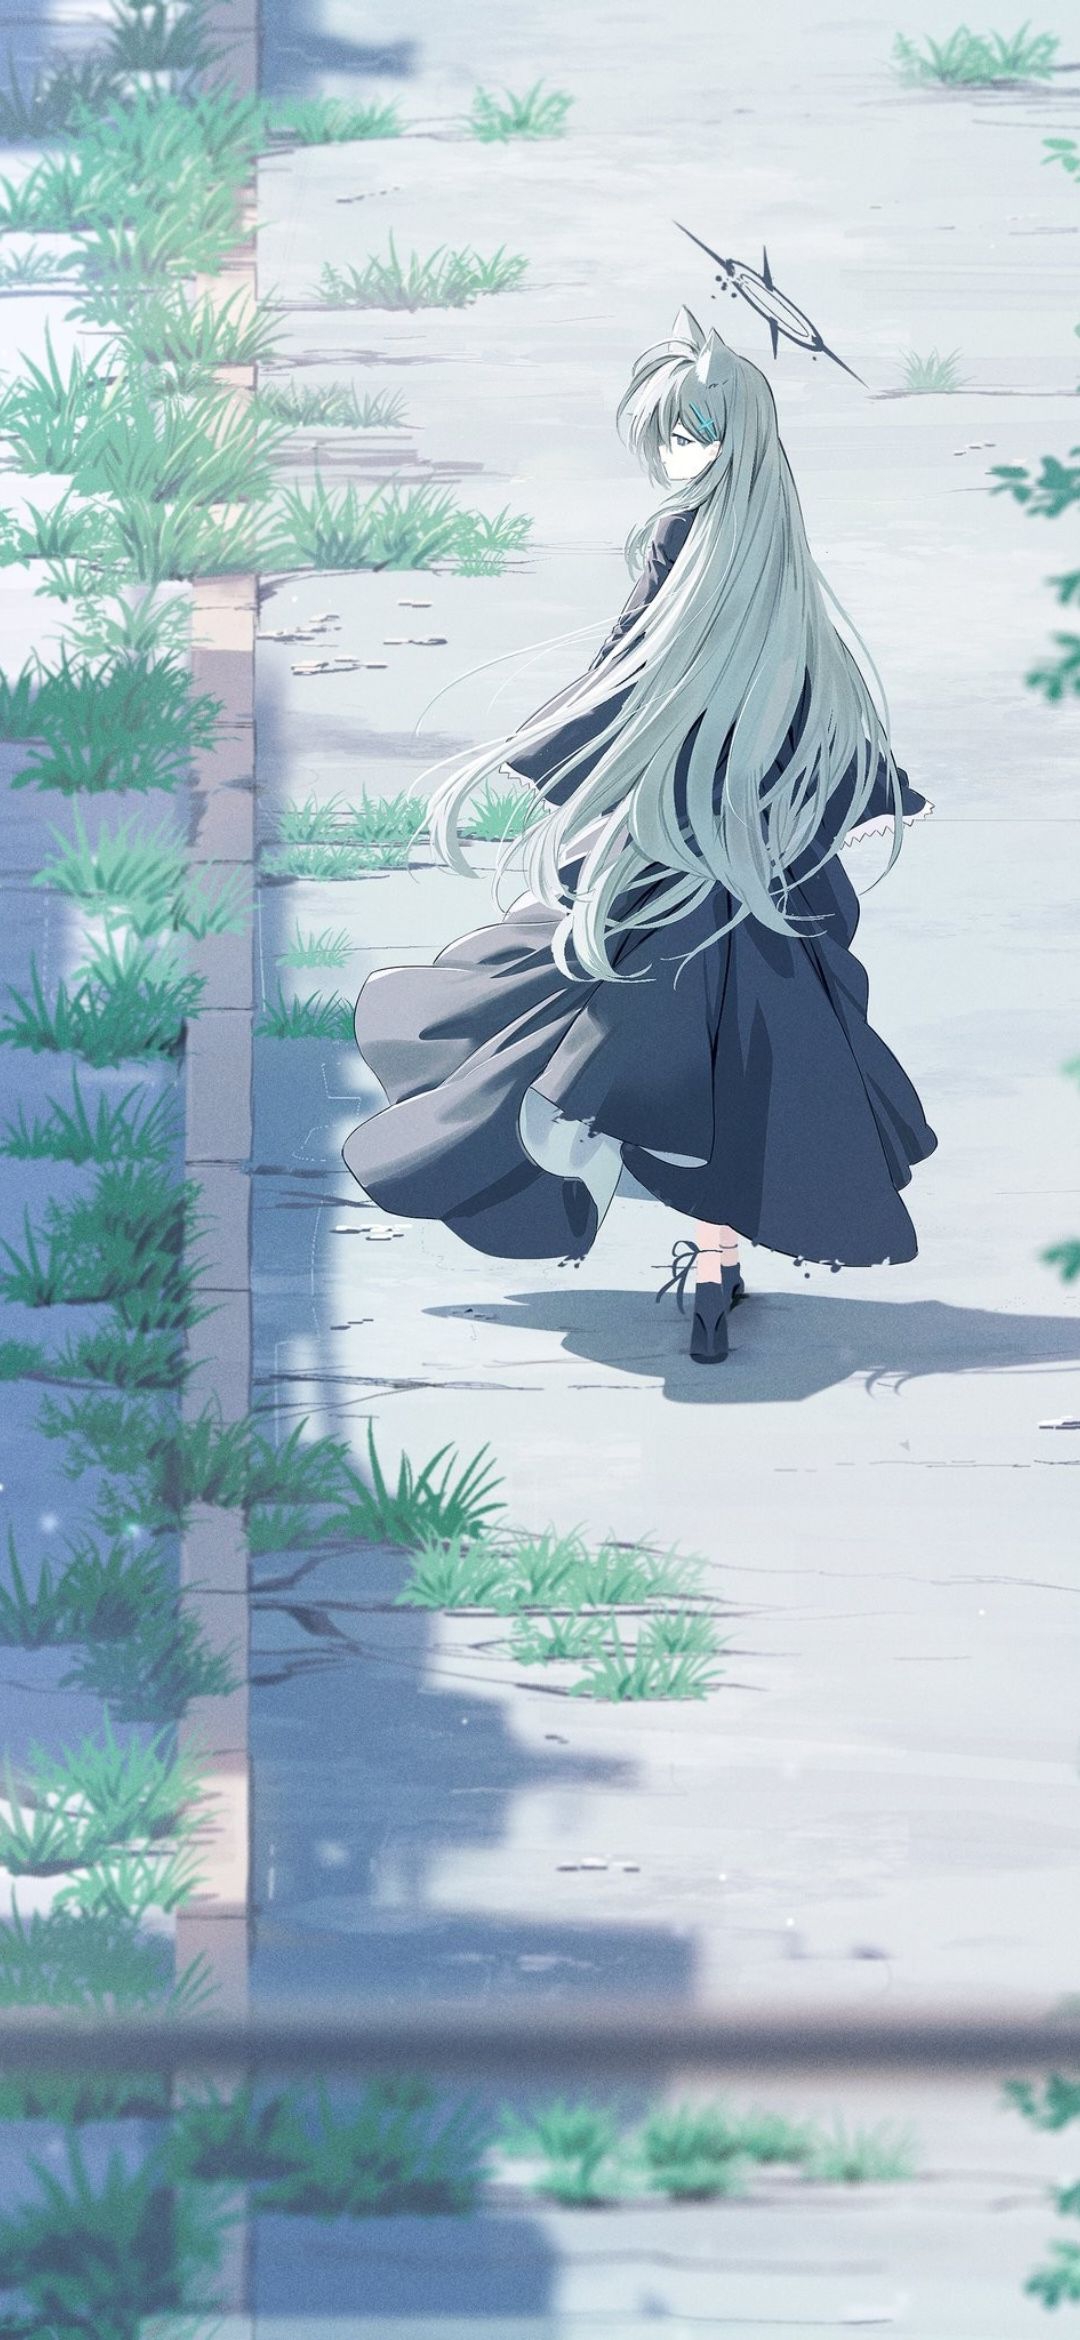 Anime Anime Girls Grass Long Hair Looking Back Outdoors Women Outdoors Gray Hair Heels Portrait Disp 1080x2340